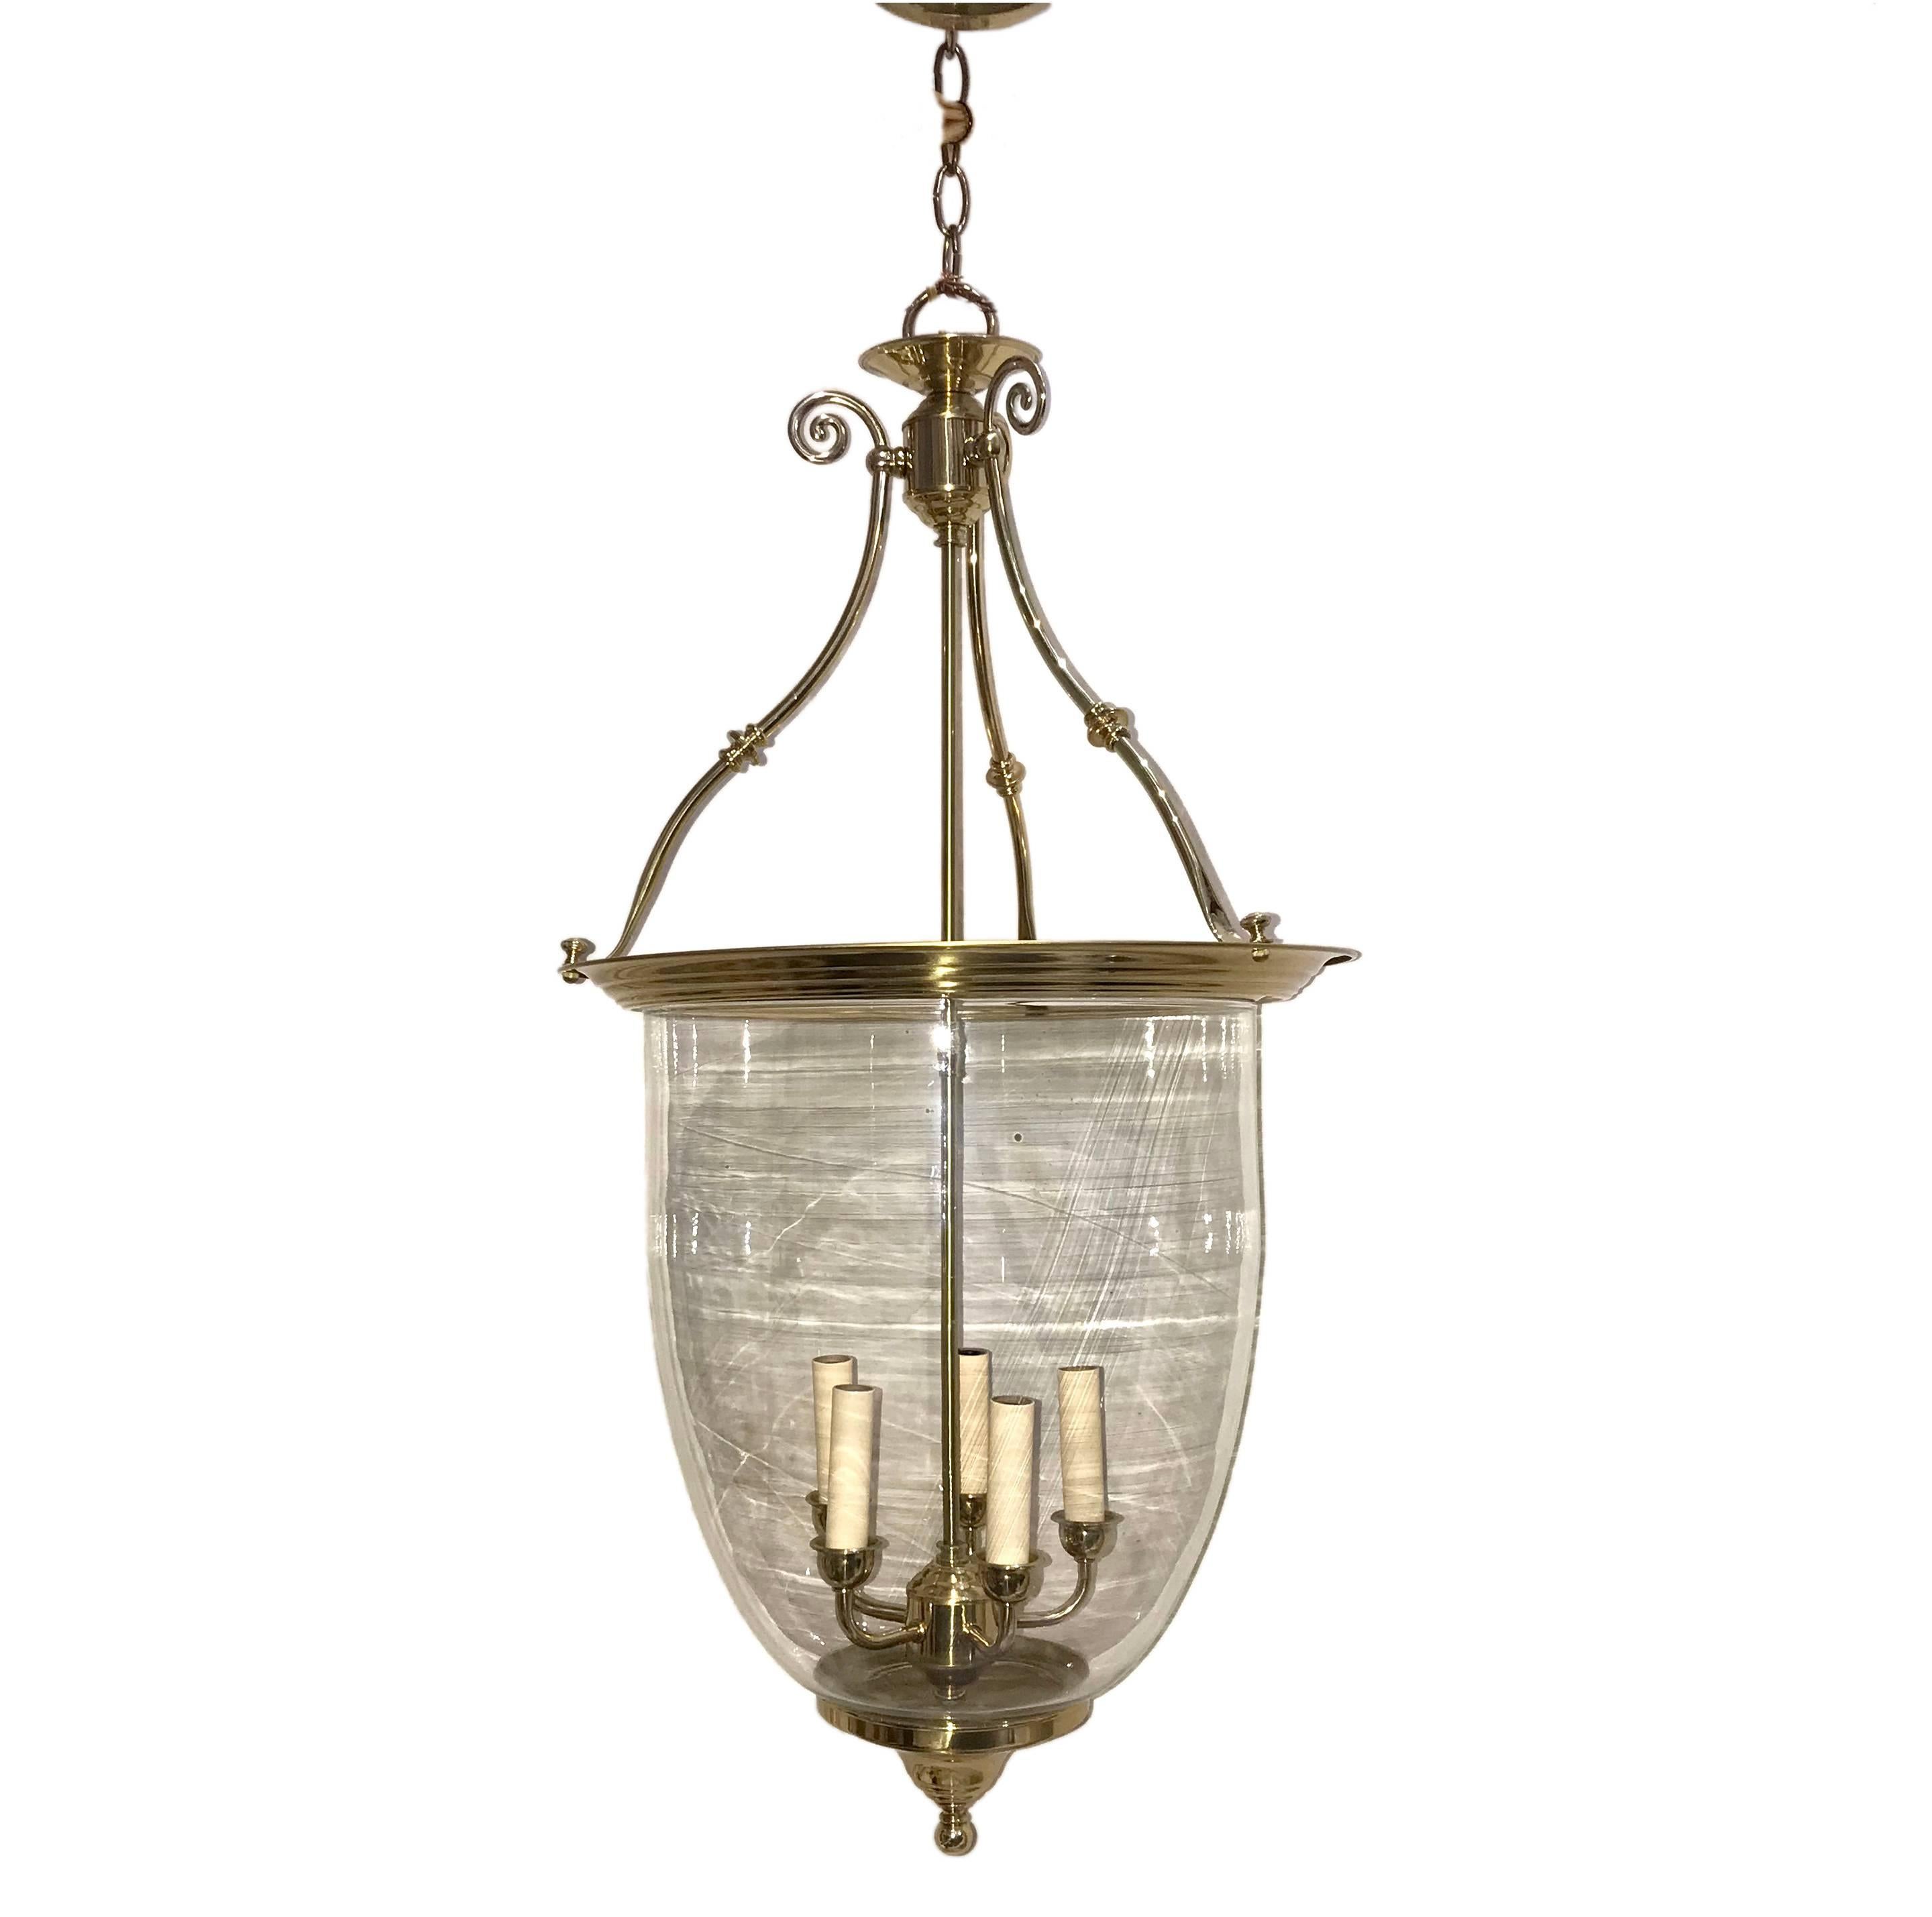 A circa 1960 Italian gilt brass lantern with six interior lights.

Measurements
Drop 33.5